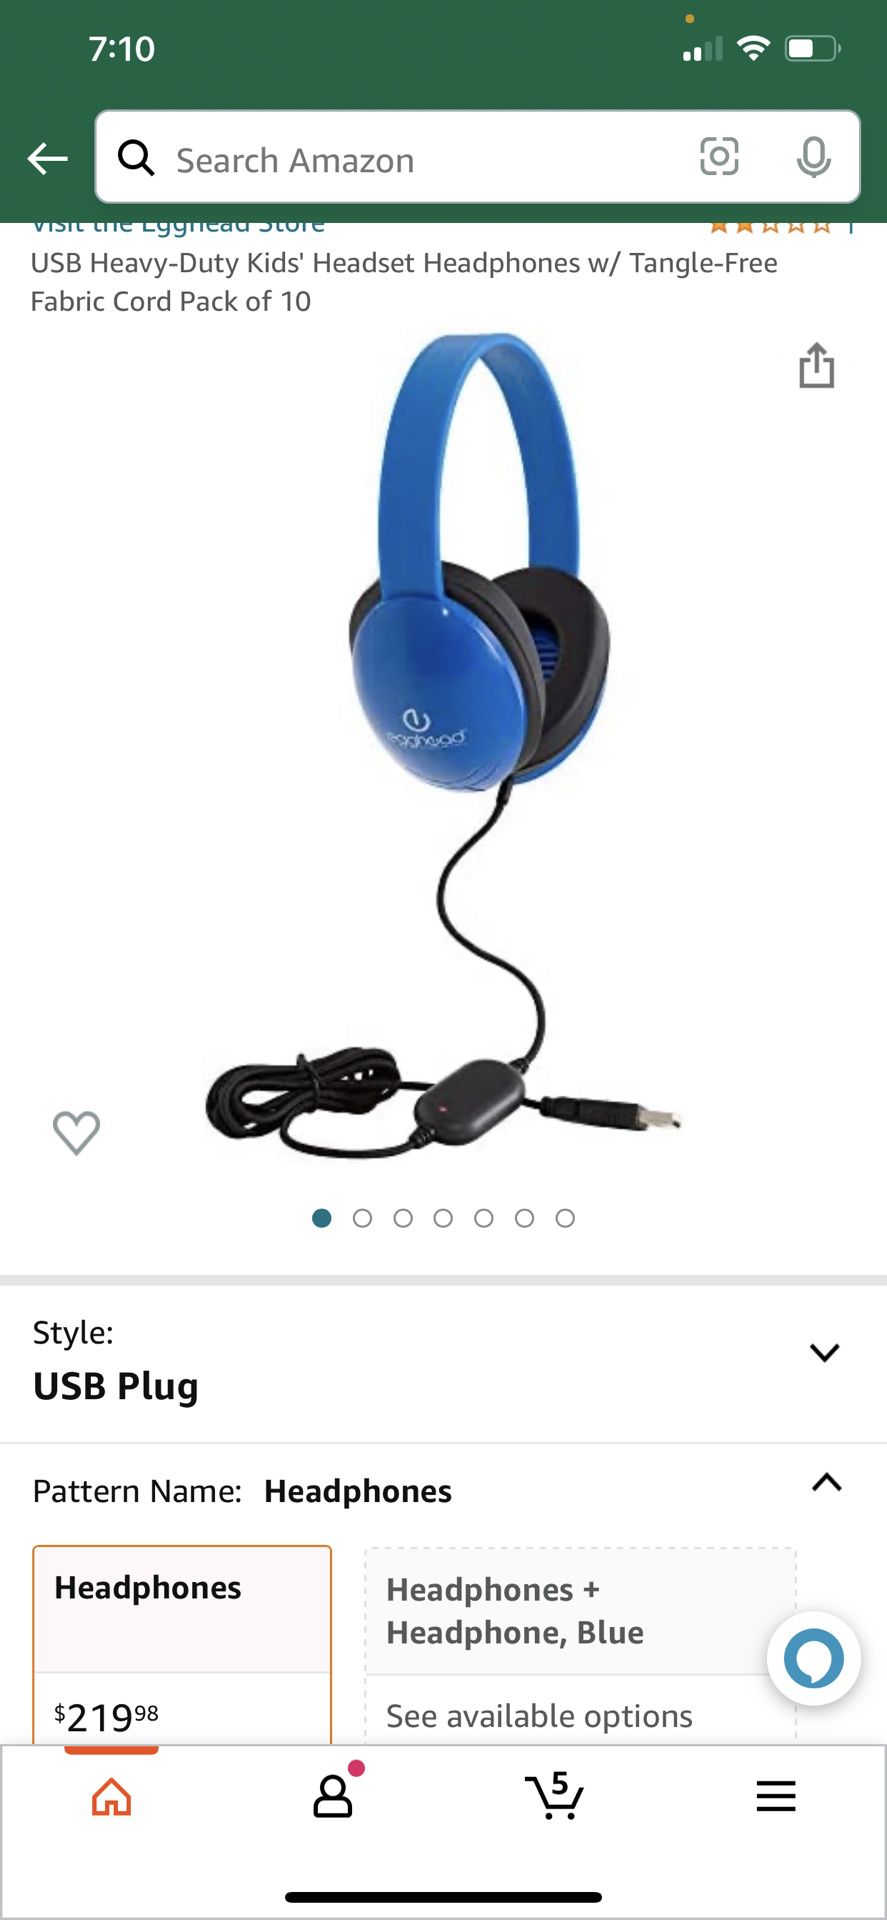 USB Heavy-Duty Kids' Headset Headphones w/ Tangle-Free Fabric Cord Pack of 10